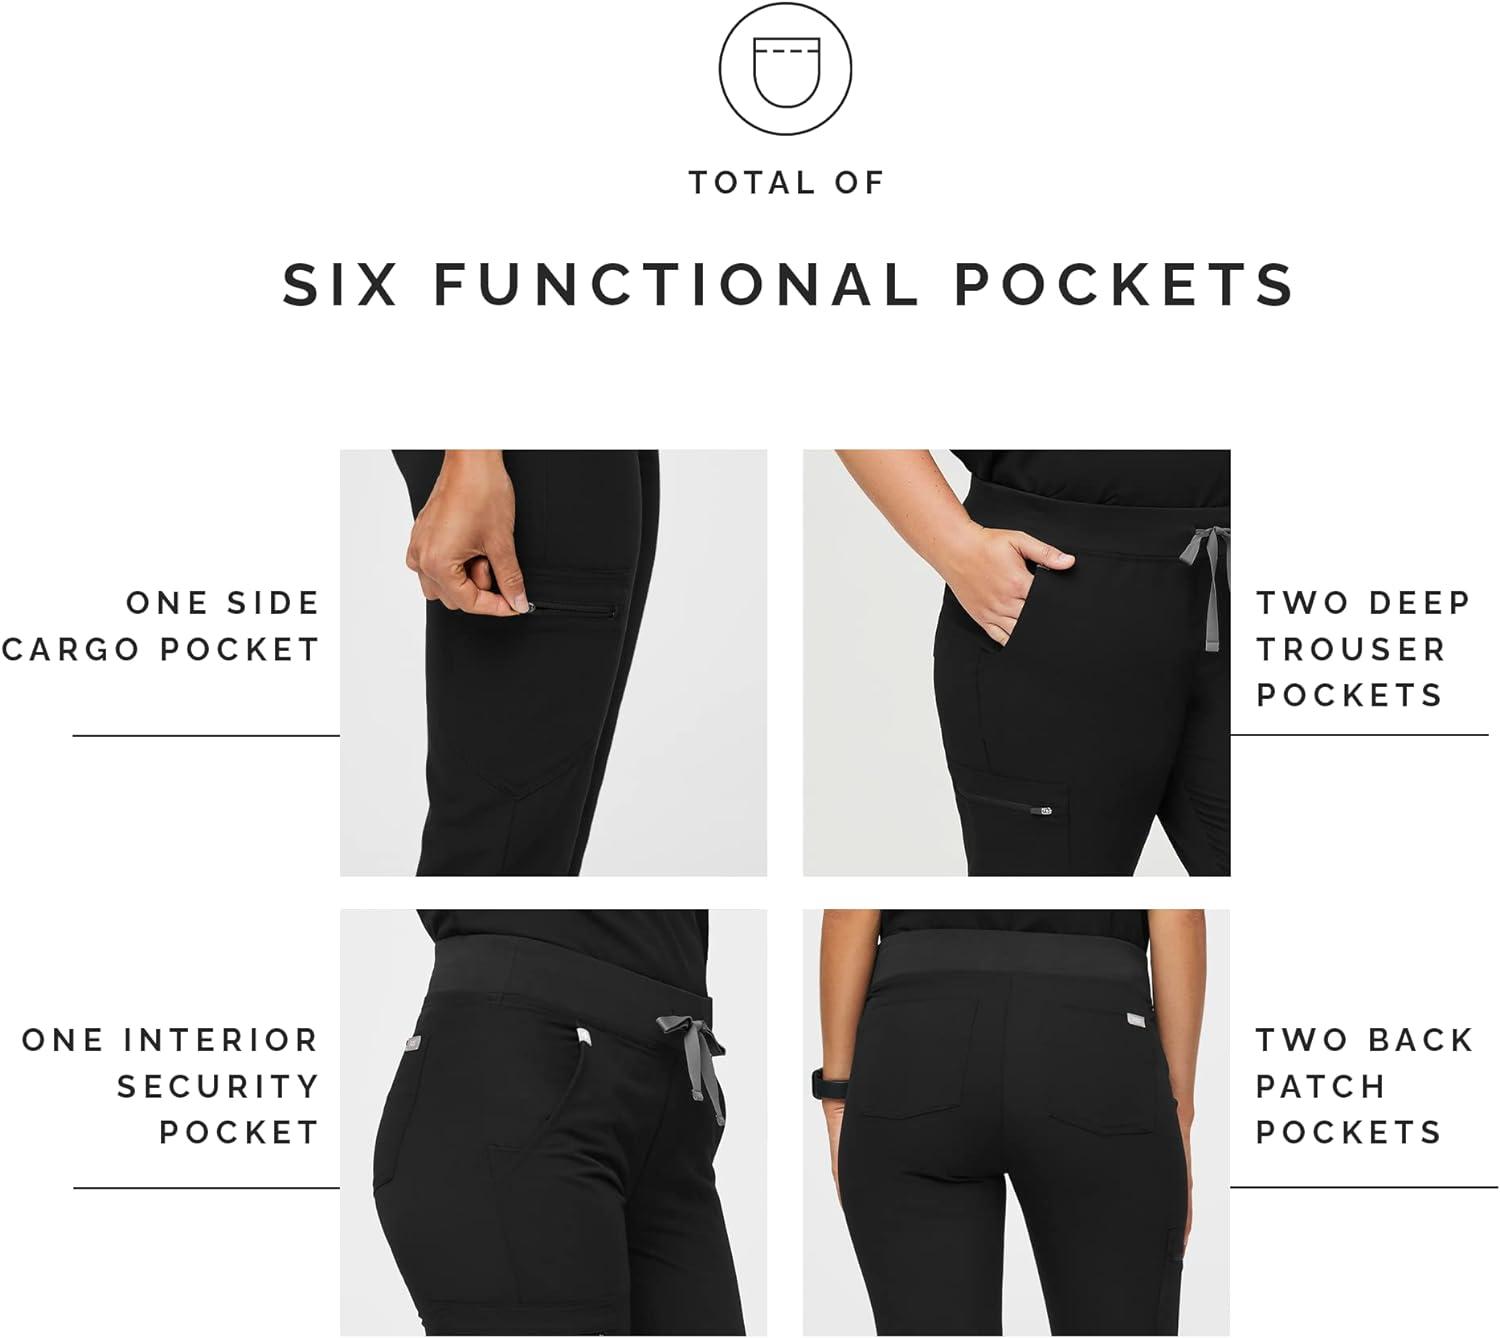 FIGS Zamora Jogger Style Scrub Pants for Women Slim Fit 6 Pockets